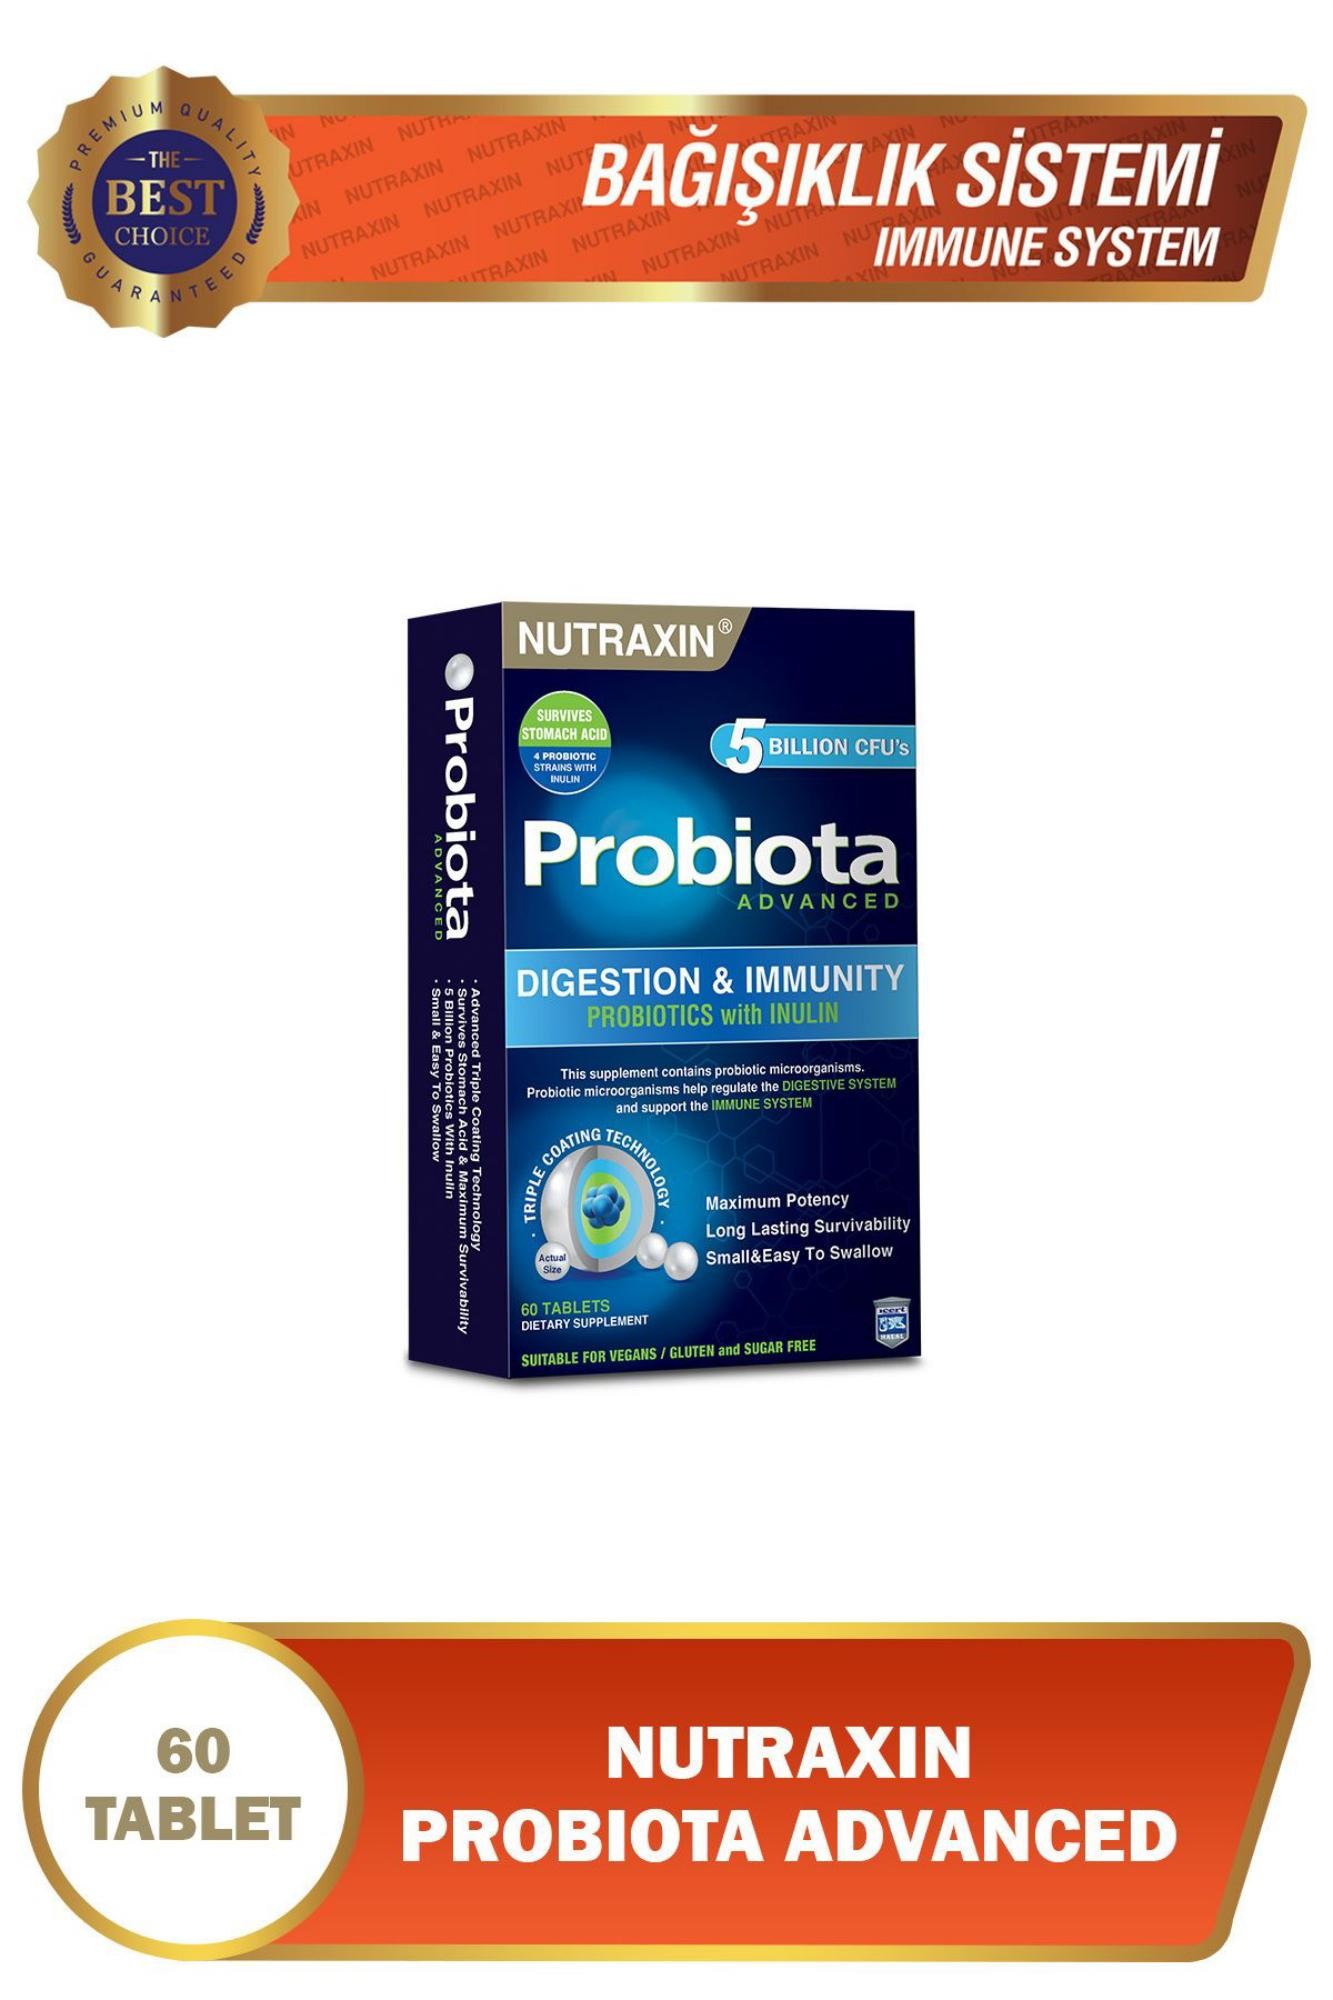 Nutraxin Probiota Advanced 60 Tablet - 5 Milyar Canlı Probiyotik